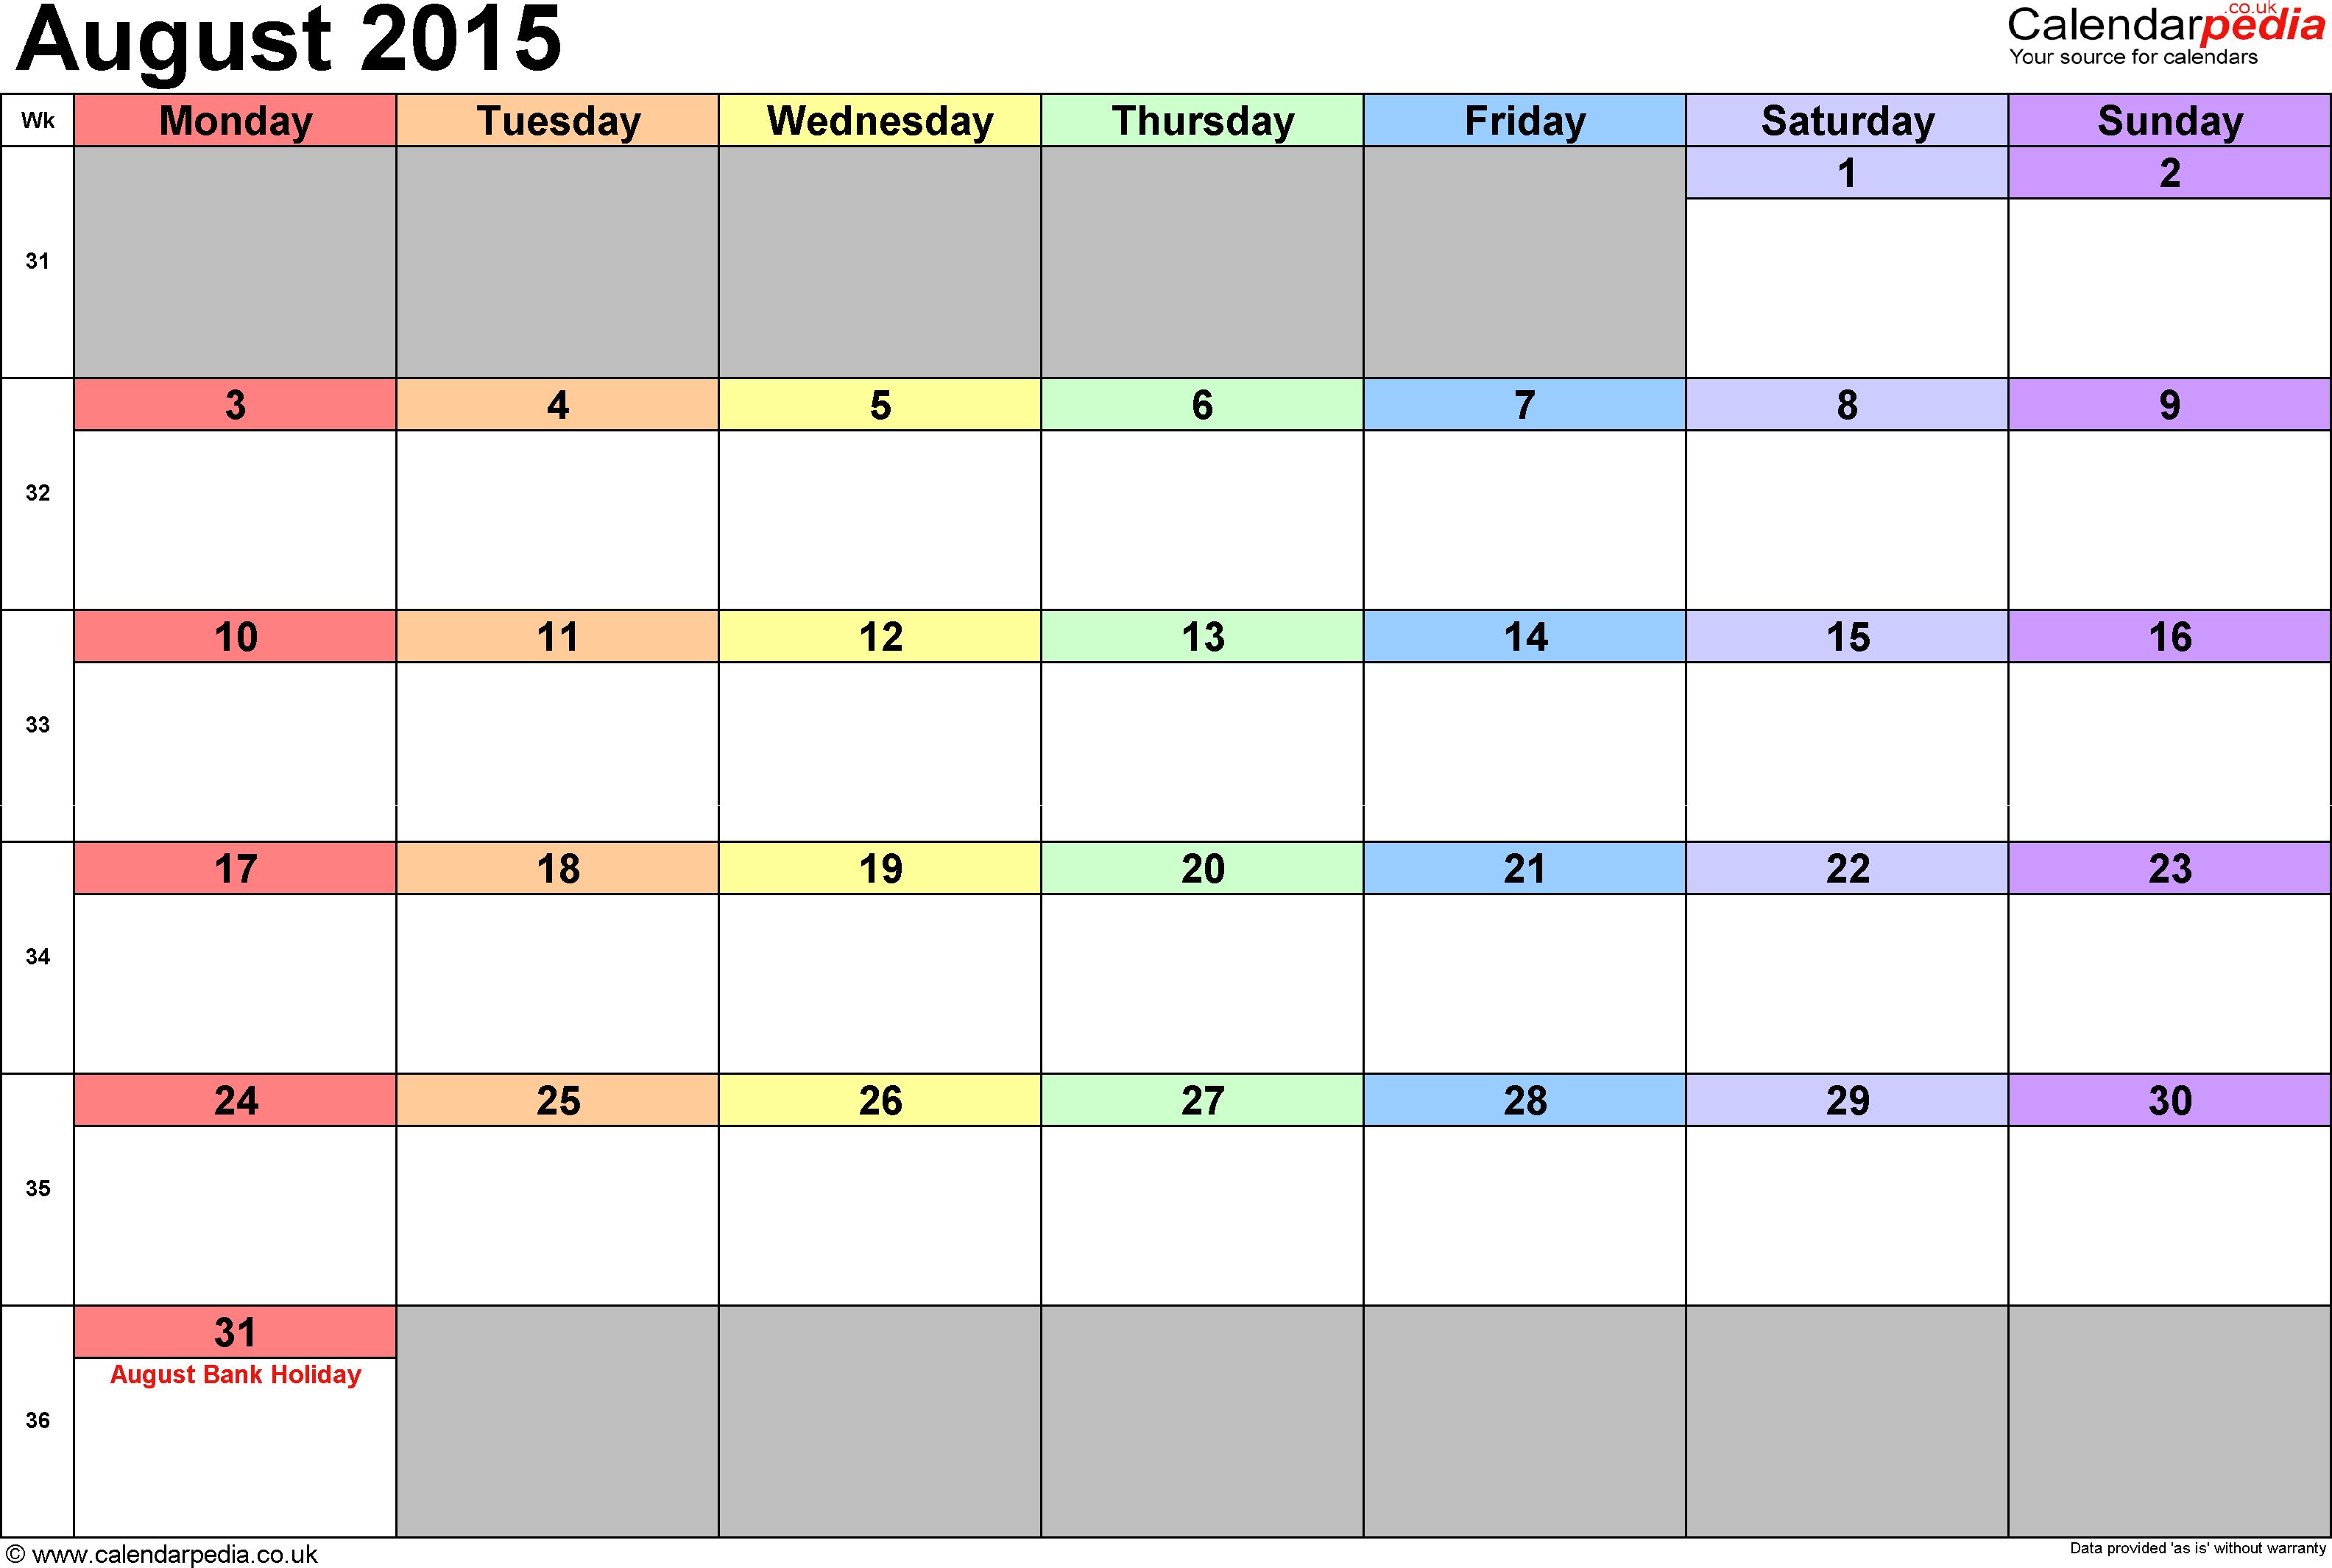 August 2015 Calendar with Holidays